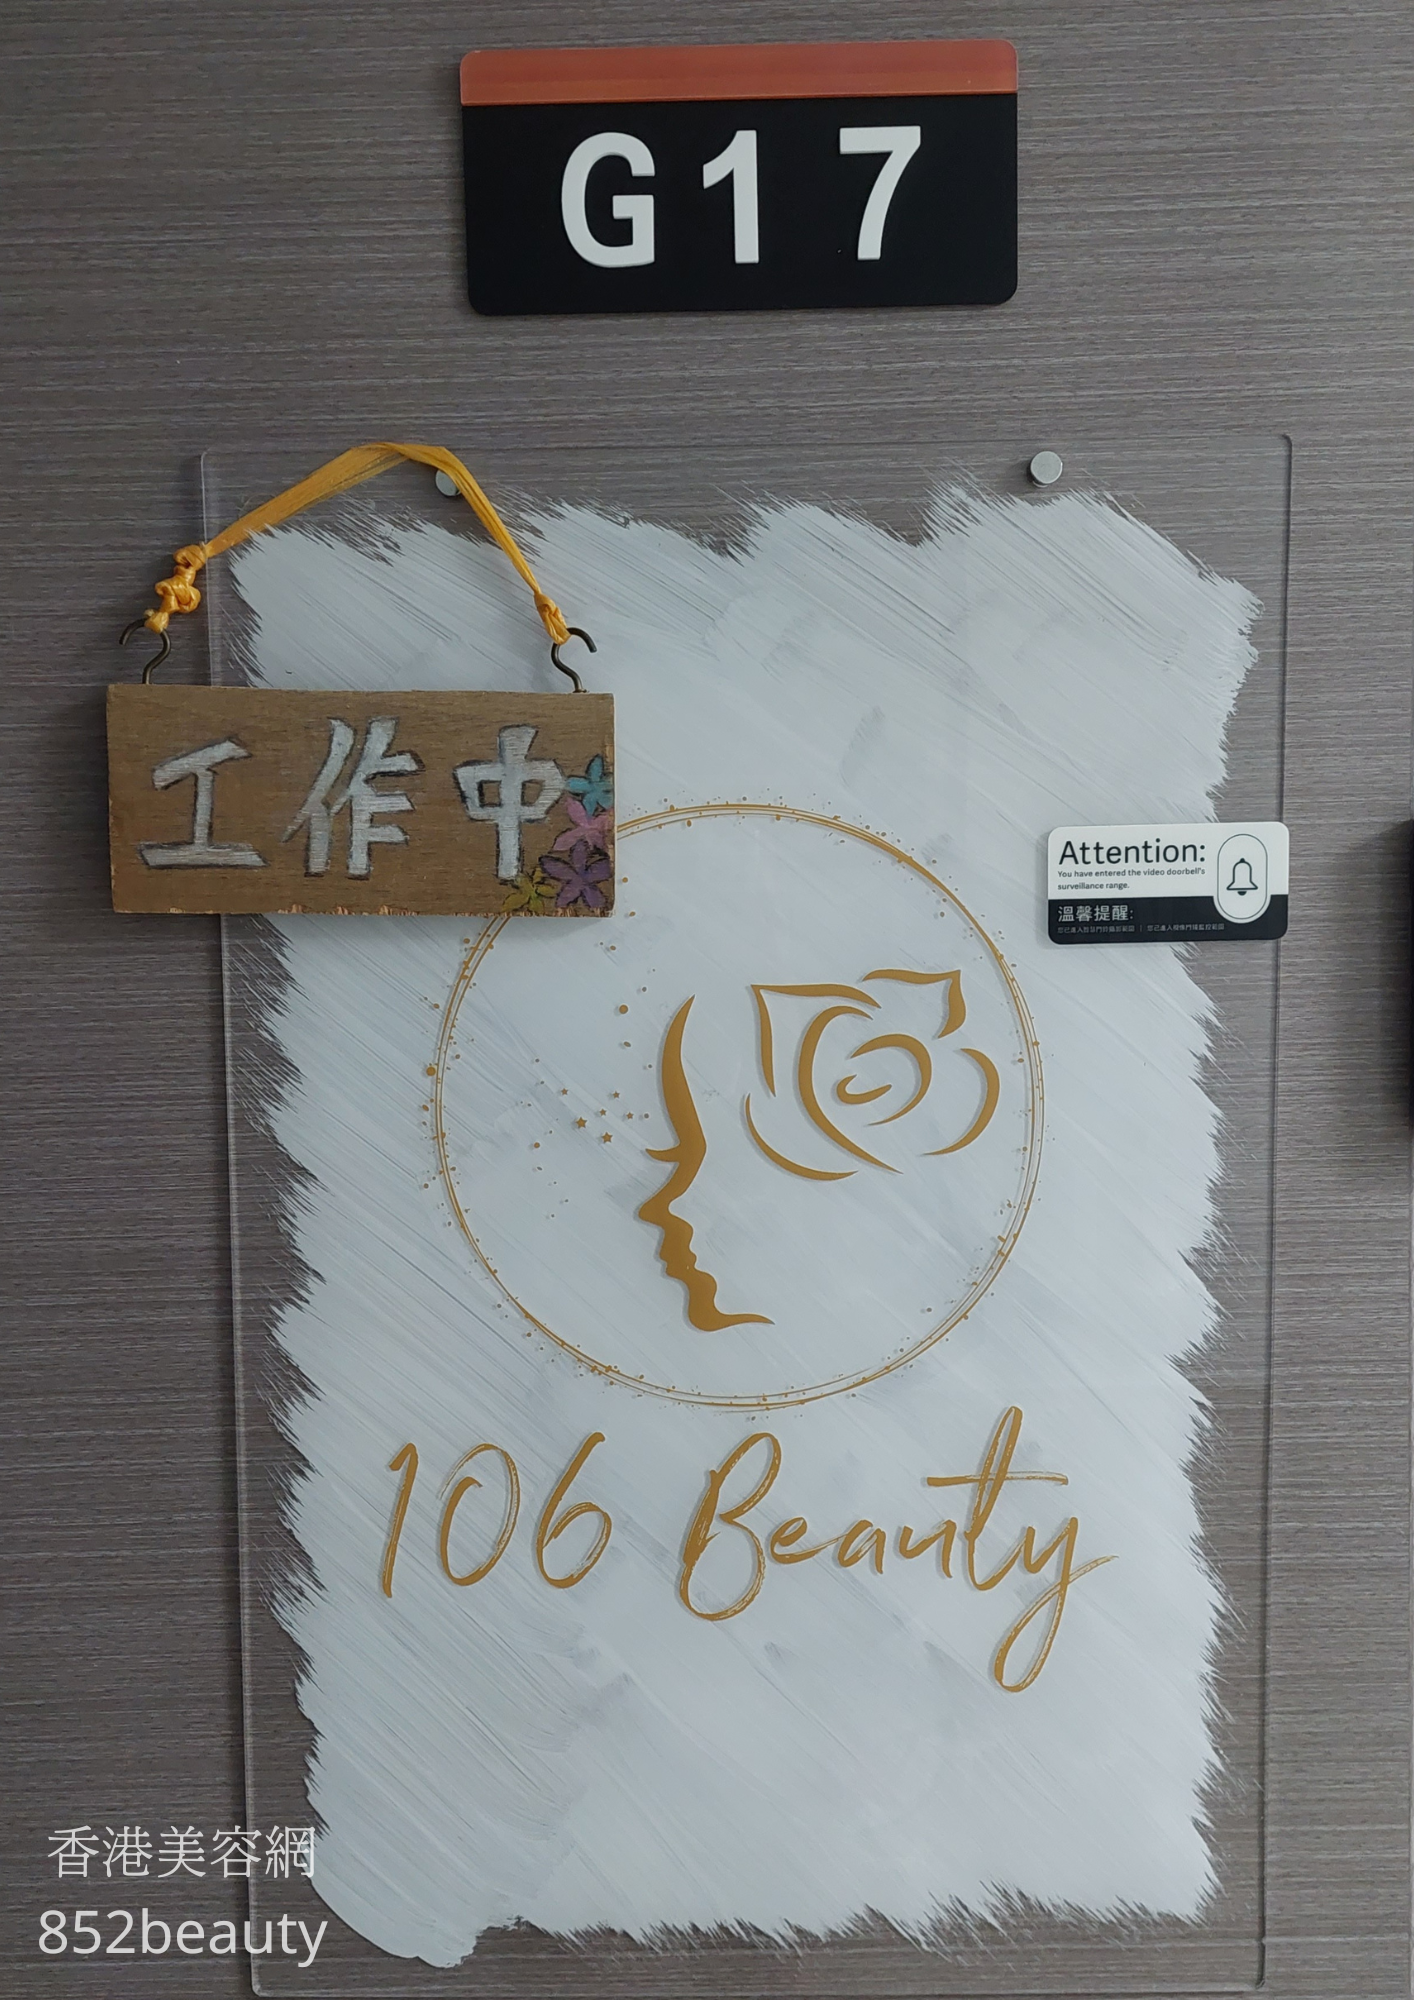 脱毛: 106 Beauty